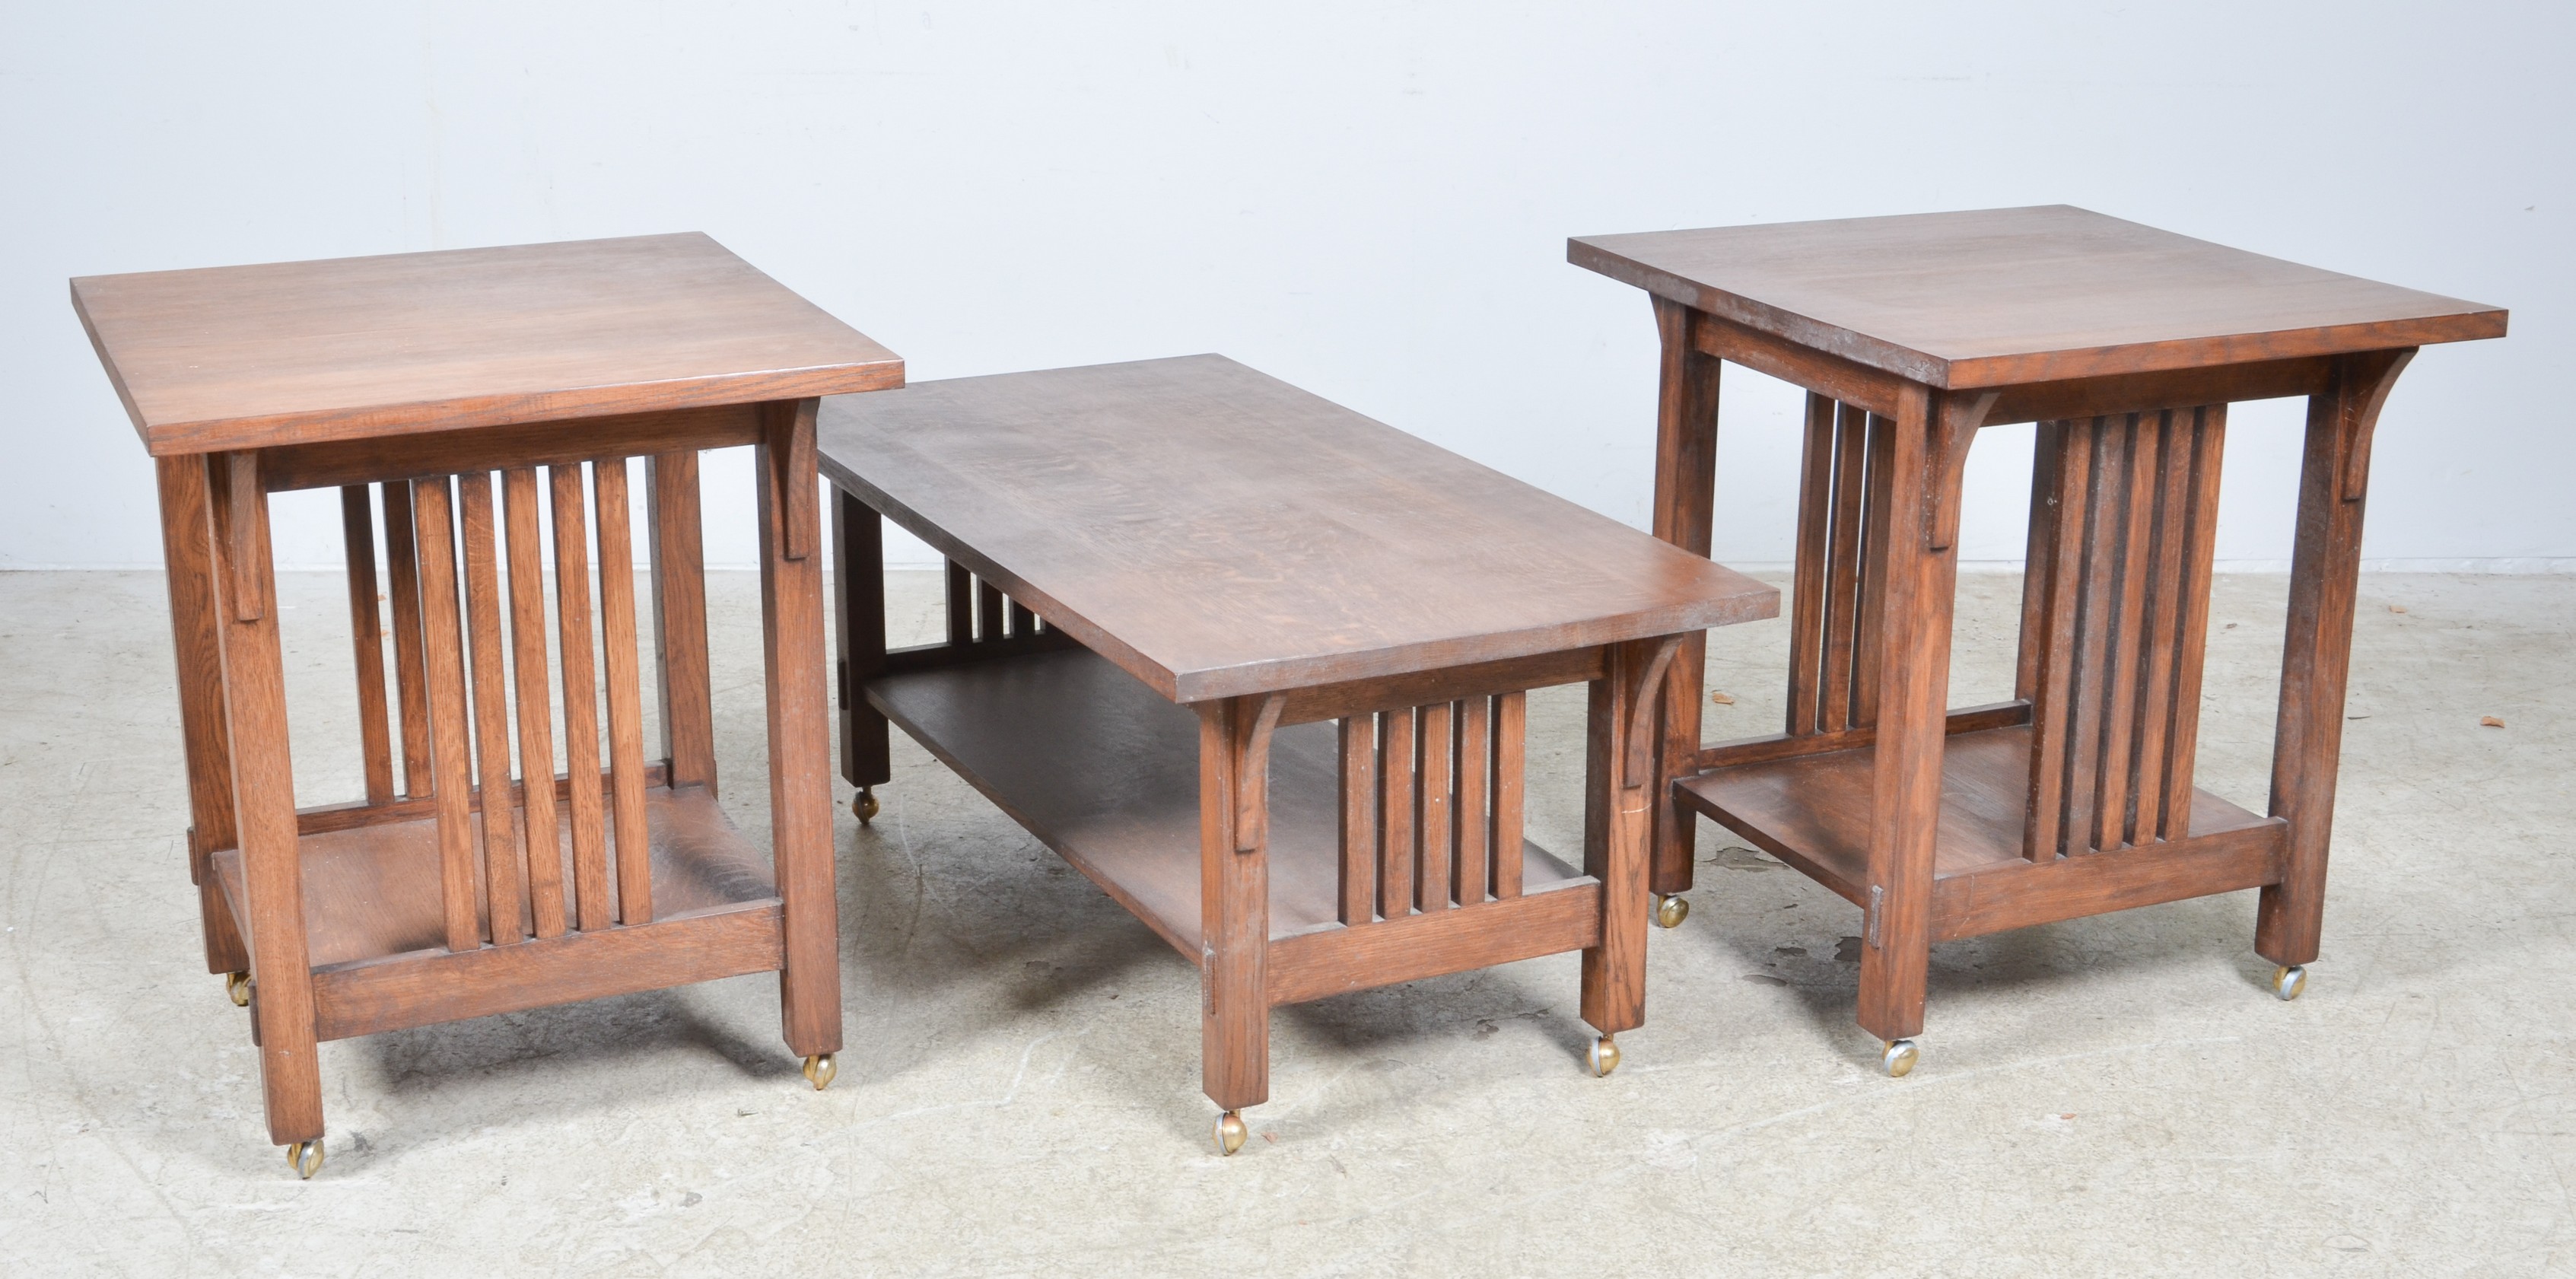  3 pc Mission style oak table 3b4bca